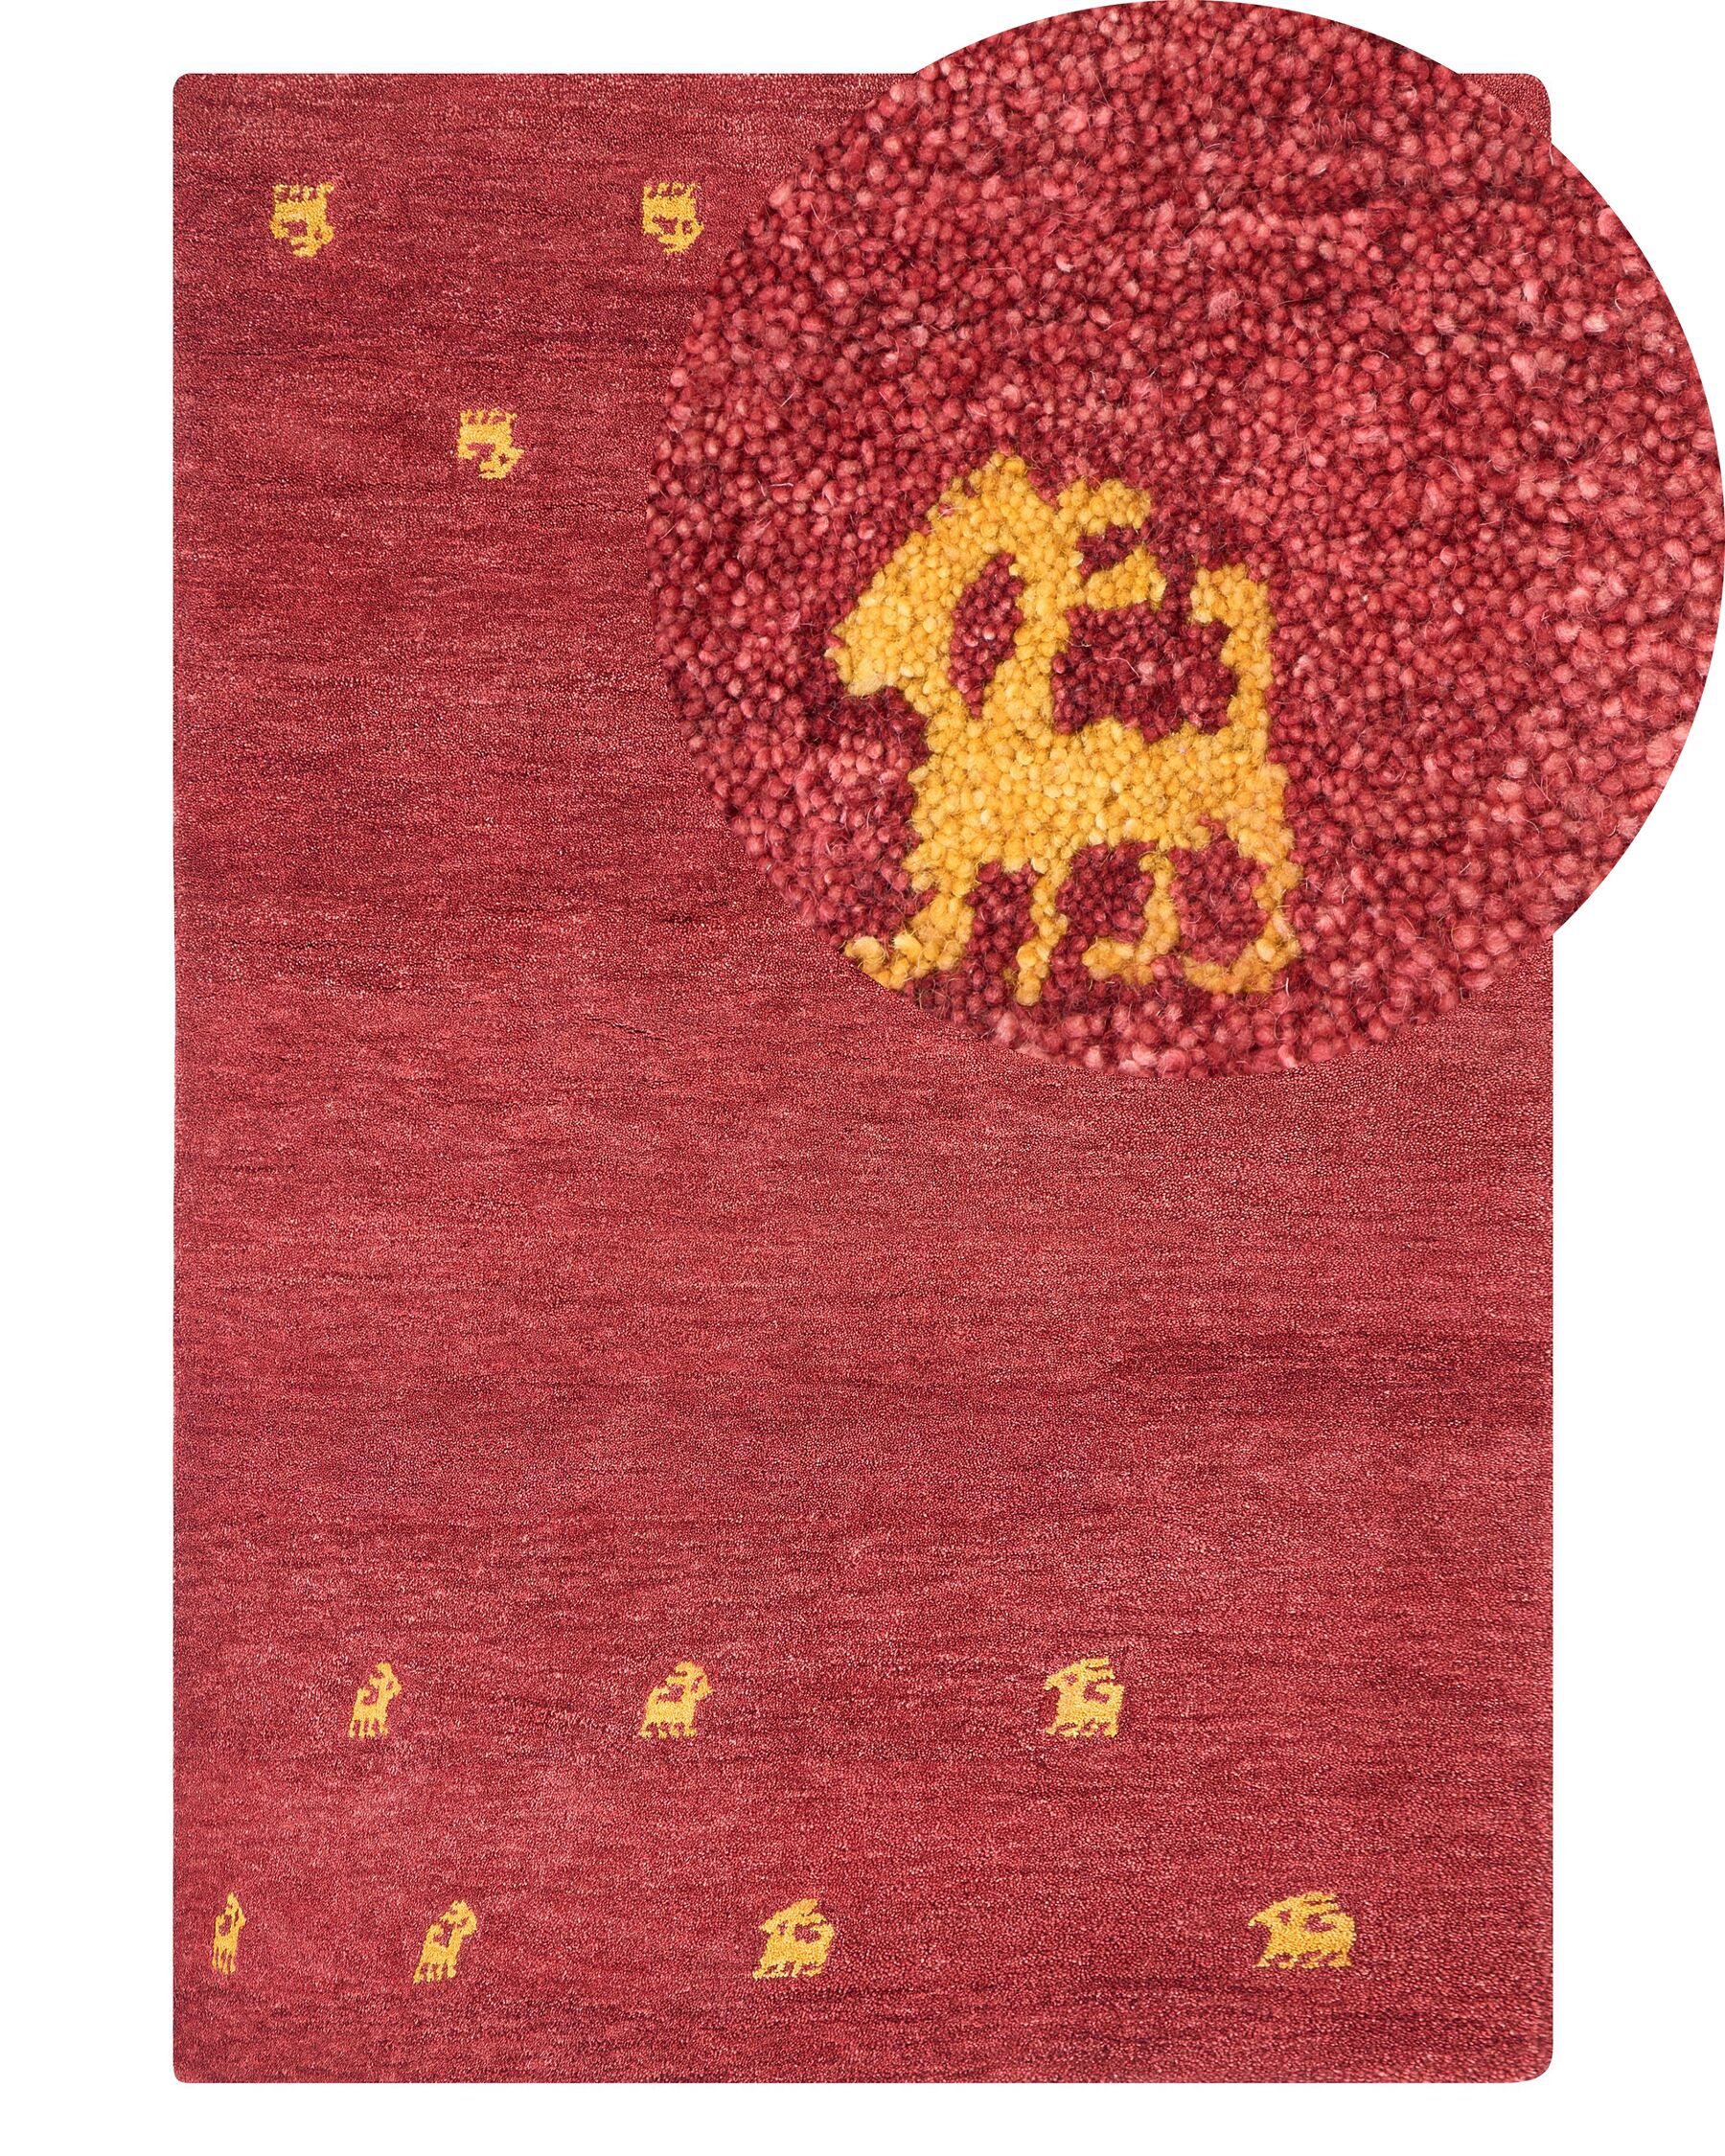 Vlnený koberec gabbeh 140 x 200 cm červený YARALI_856206